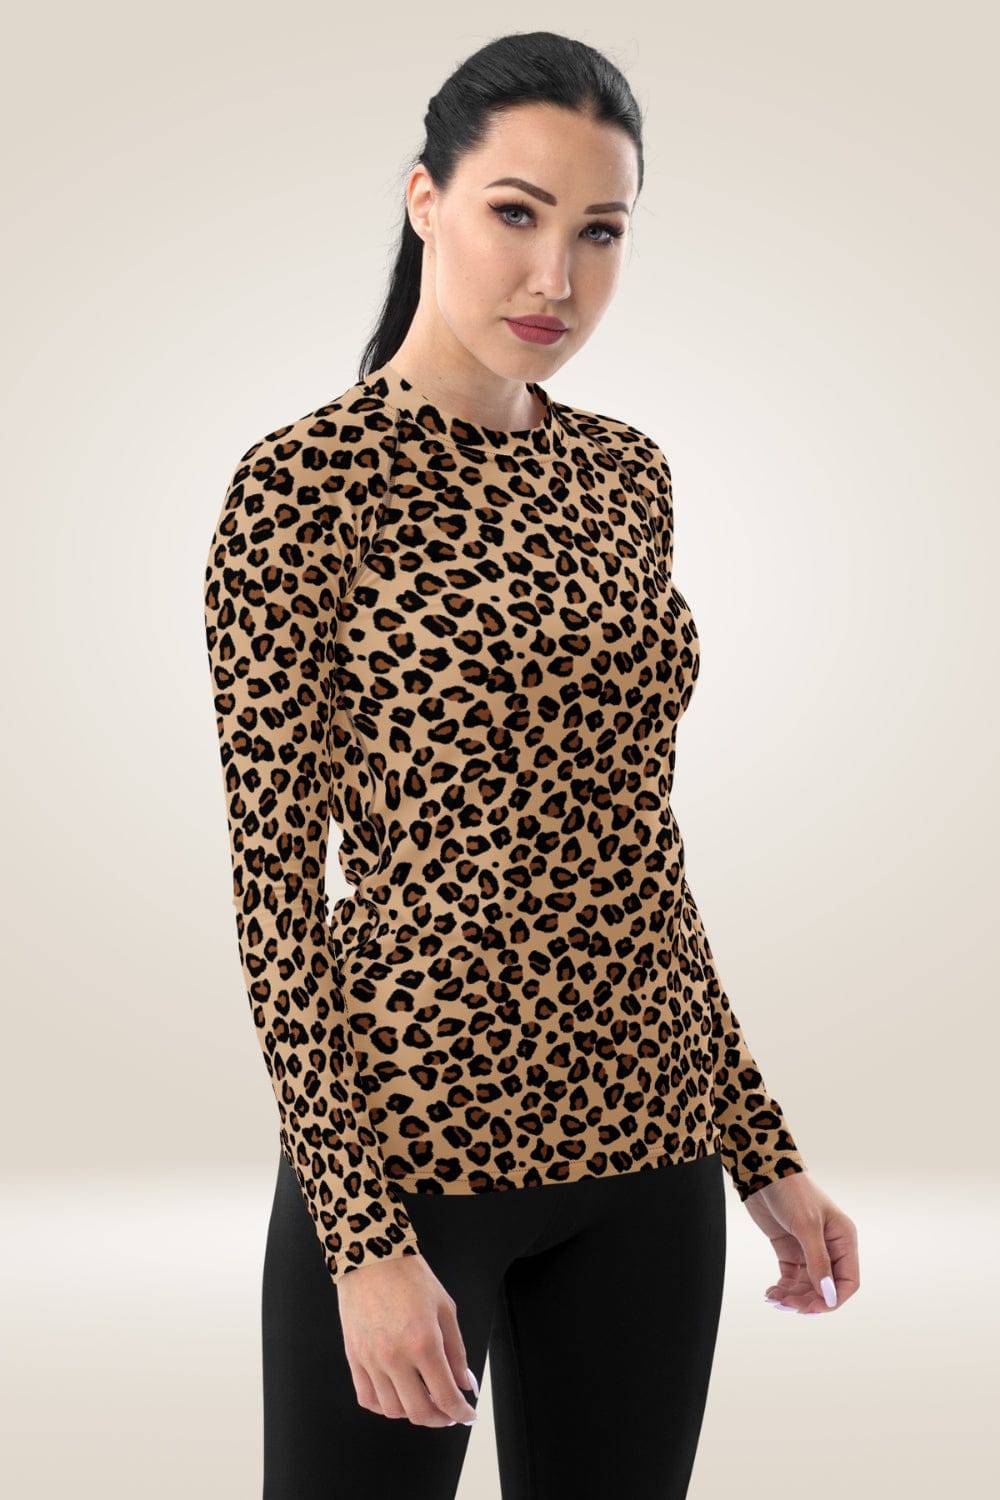 Leopard Print Rash Guard Long Sleeve Top - TGC Boutique - Top